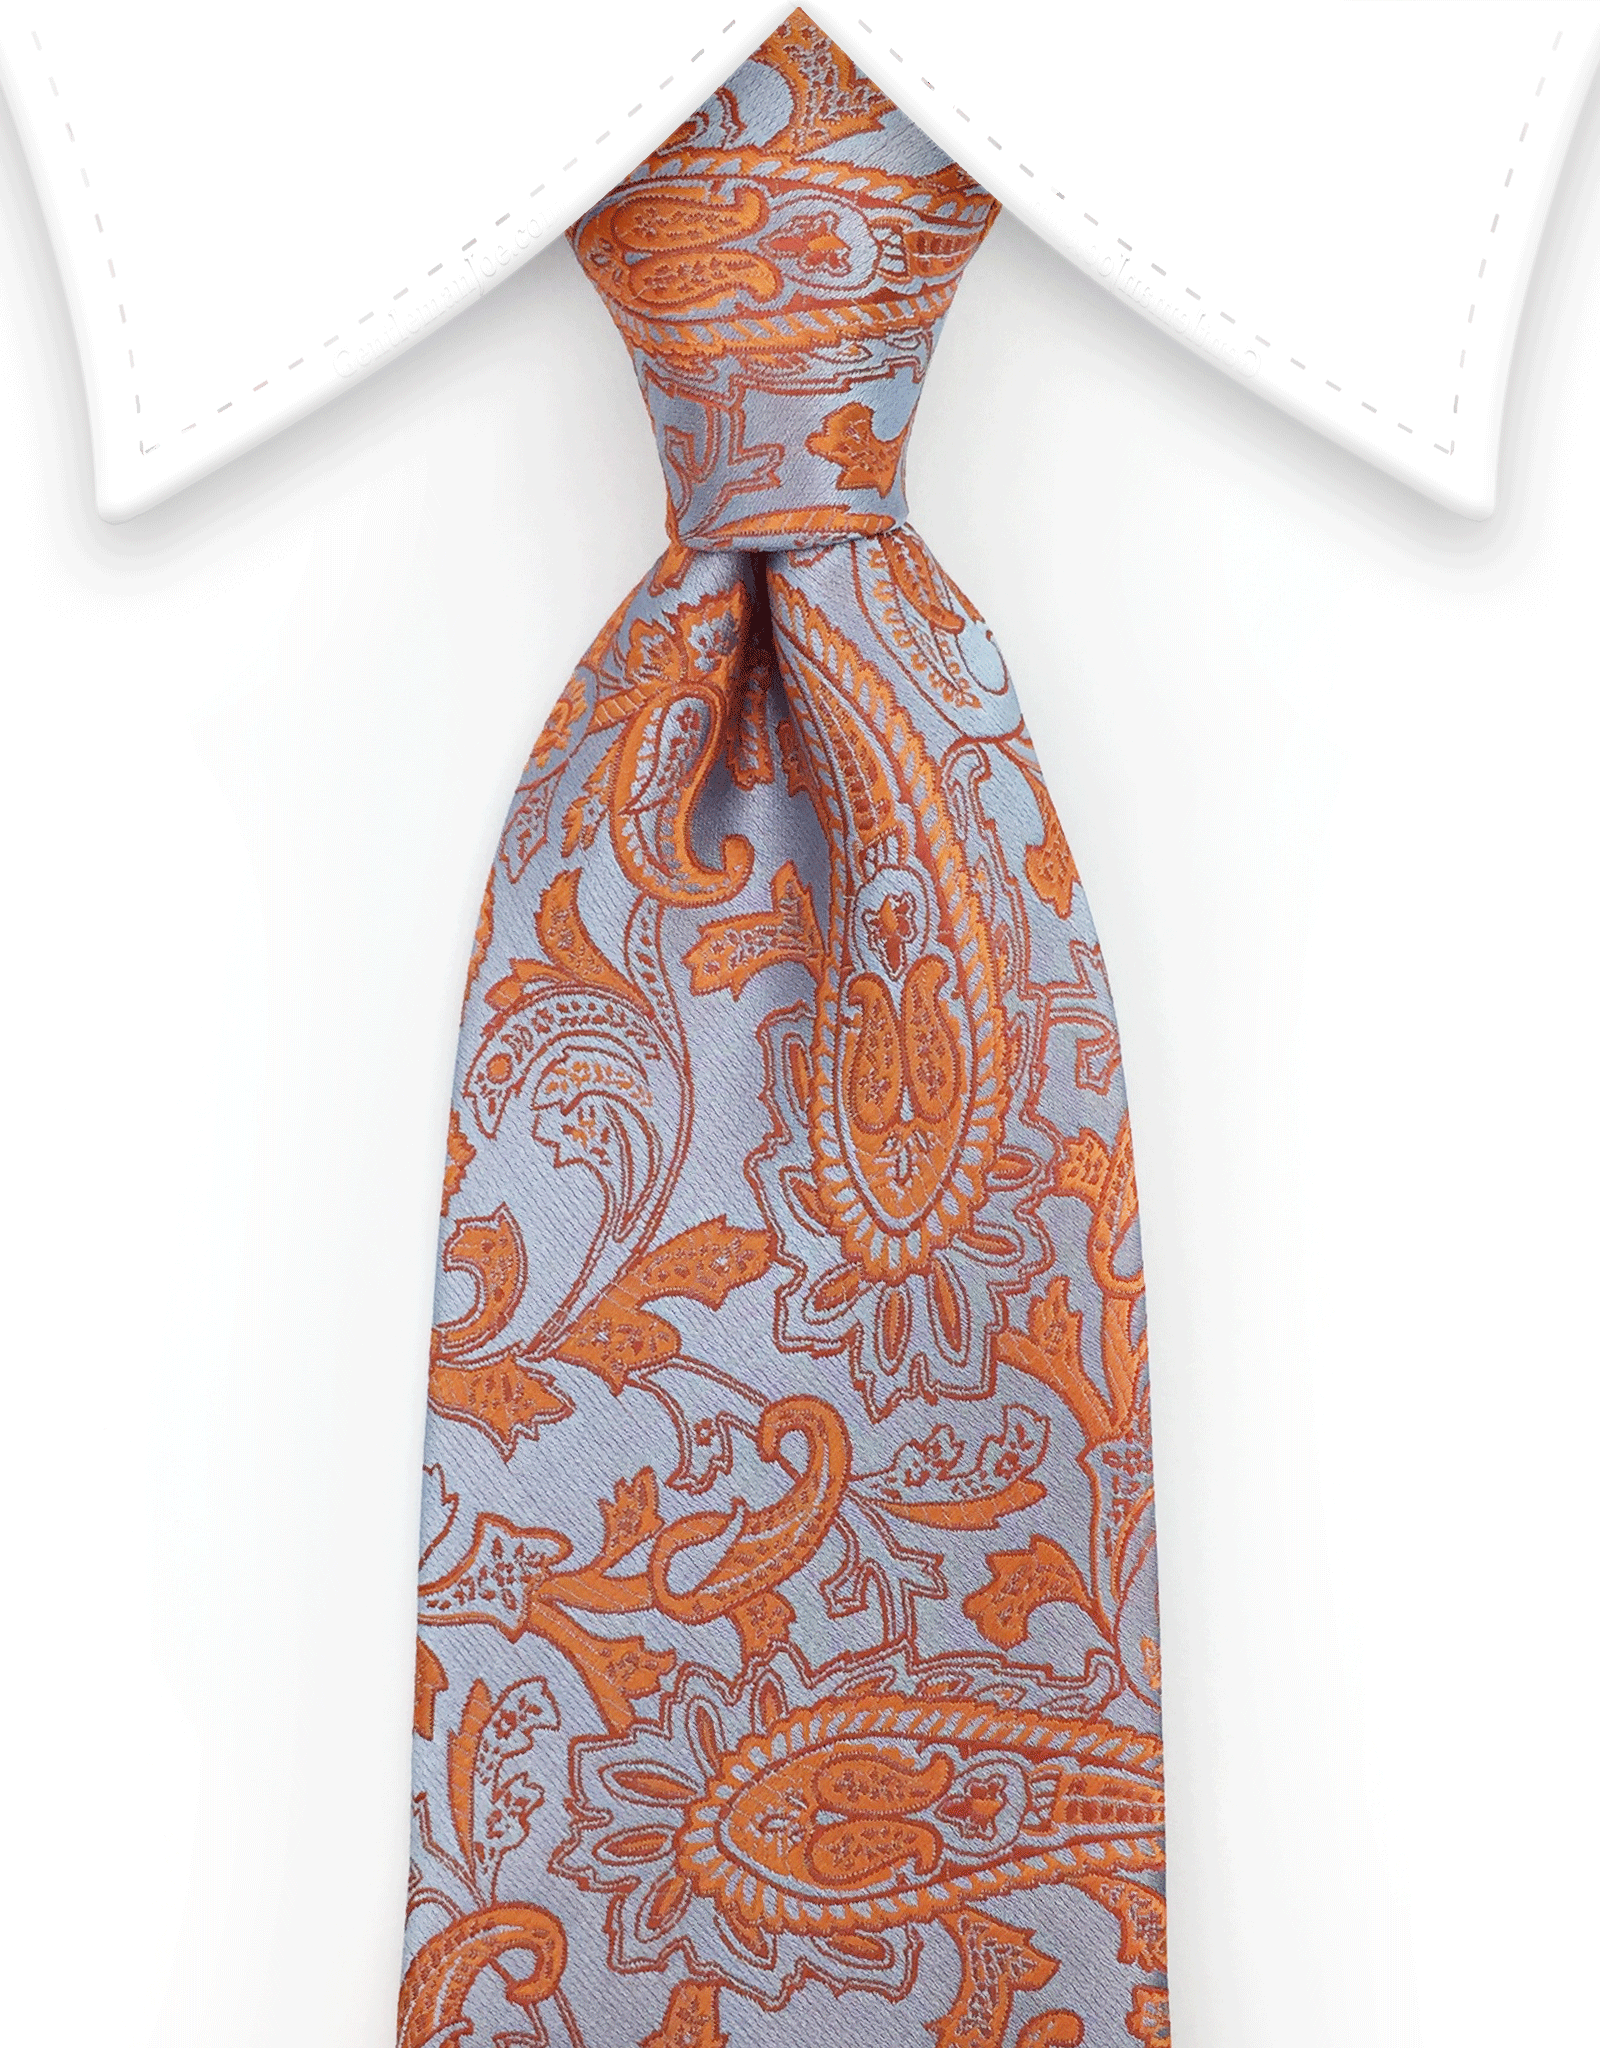 Orange and silver paisley tie